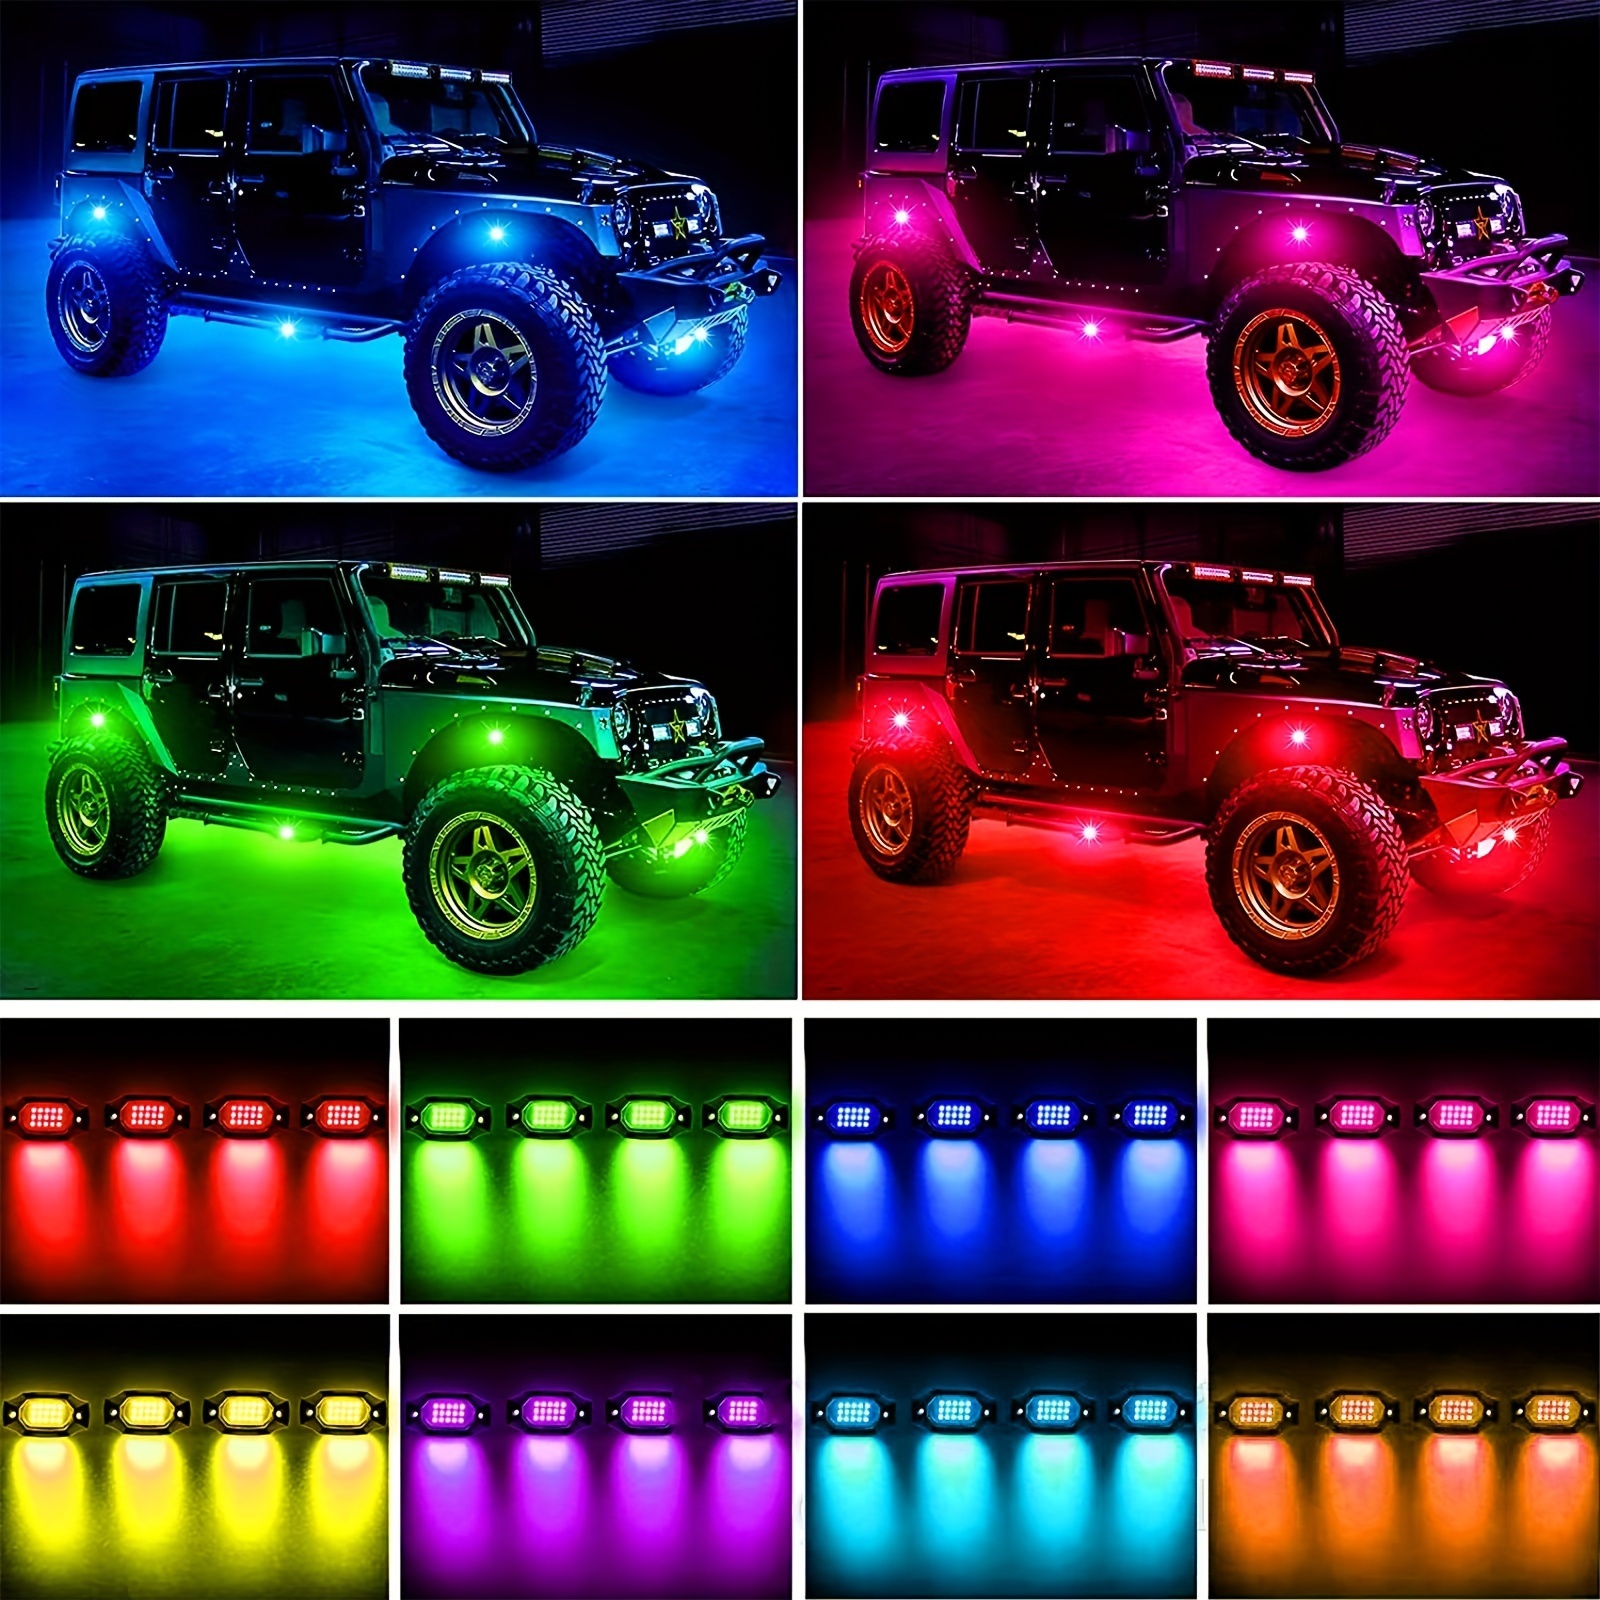 6 luces RGBIC para coche, 16 millones de colores, modo de música, control  de aplicación, kit de luces LED impermeables de 12 V para coches, camiones